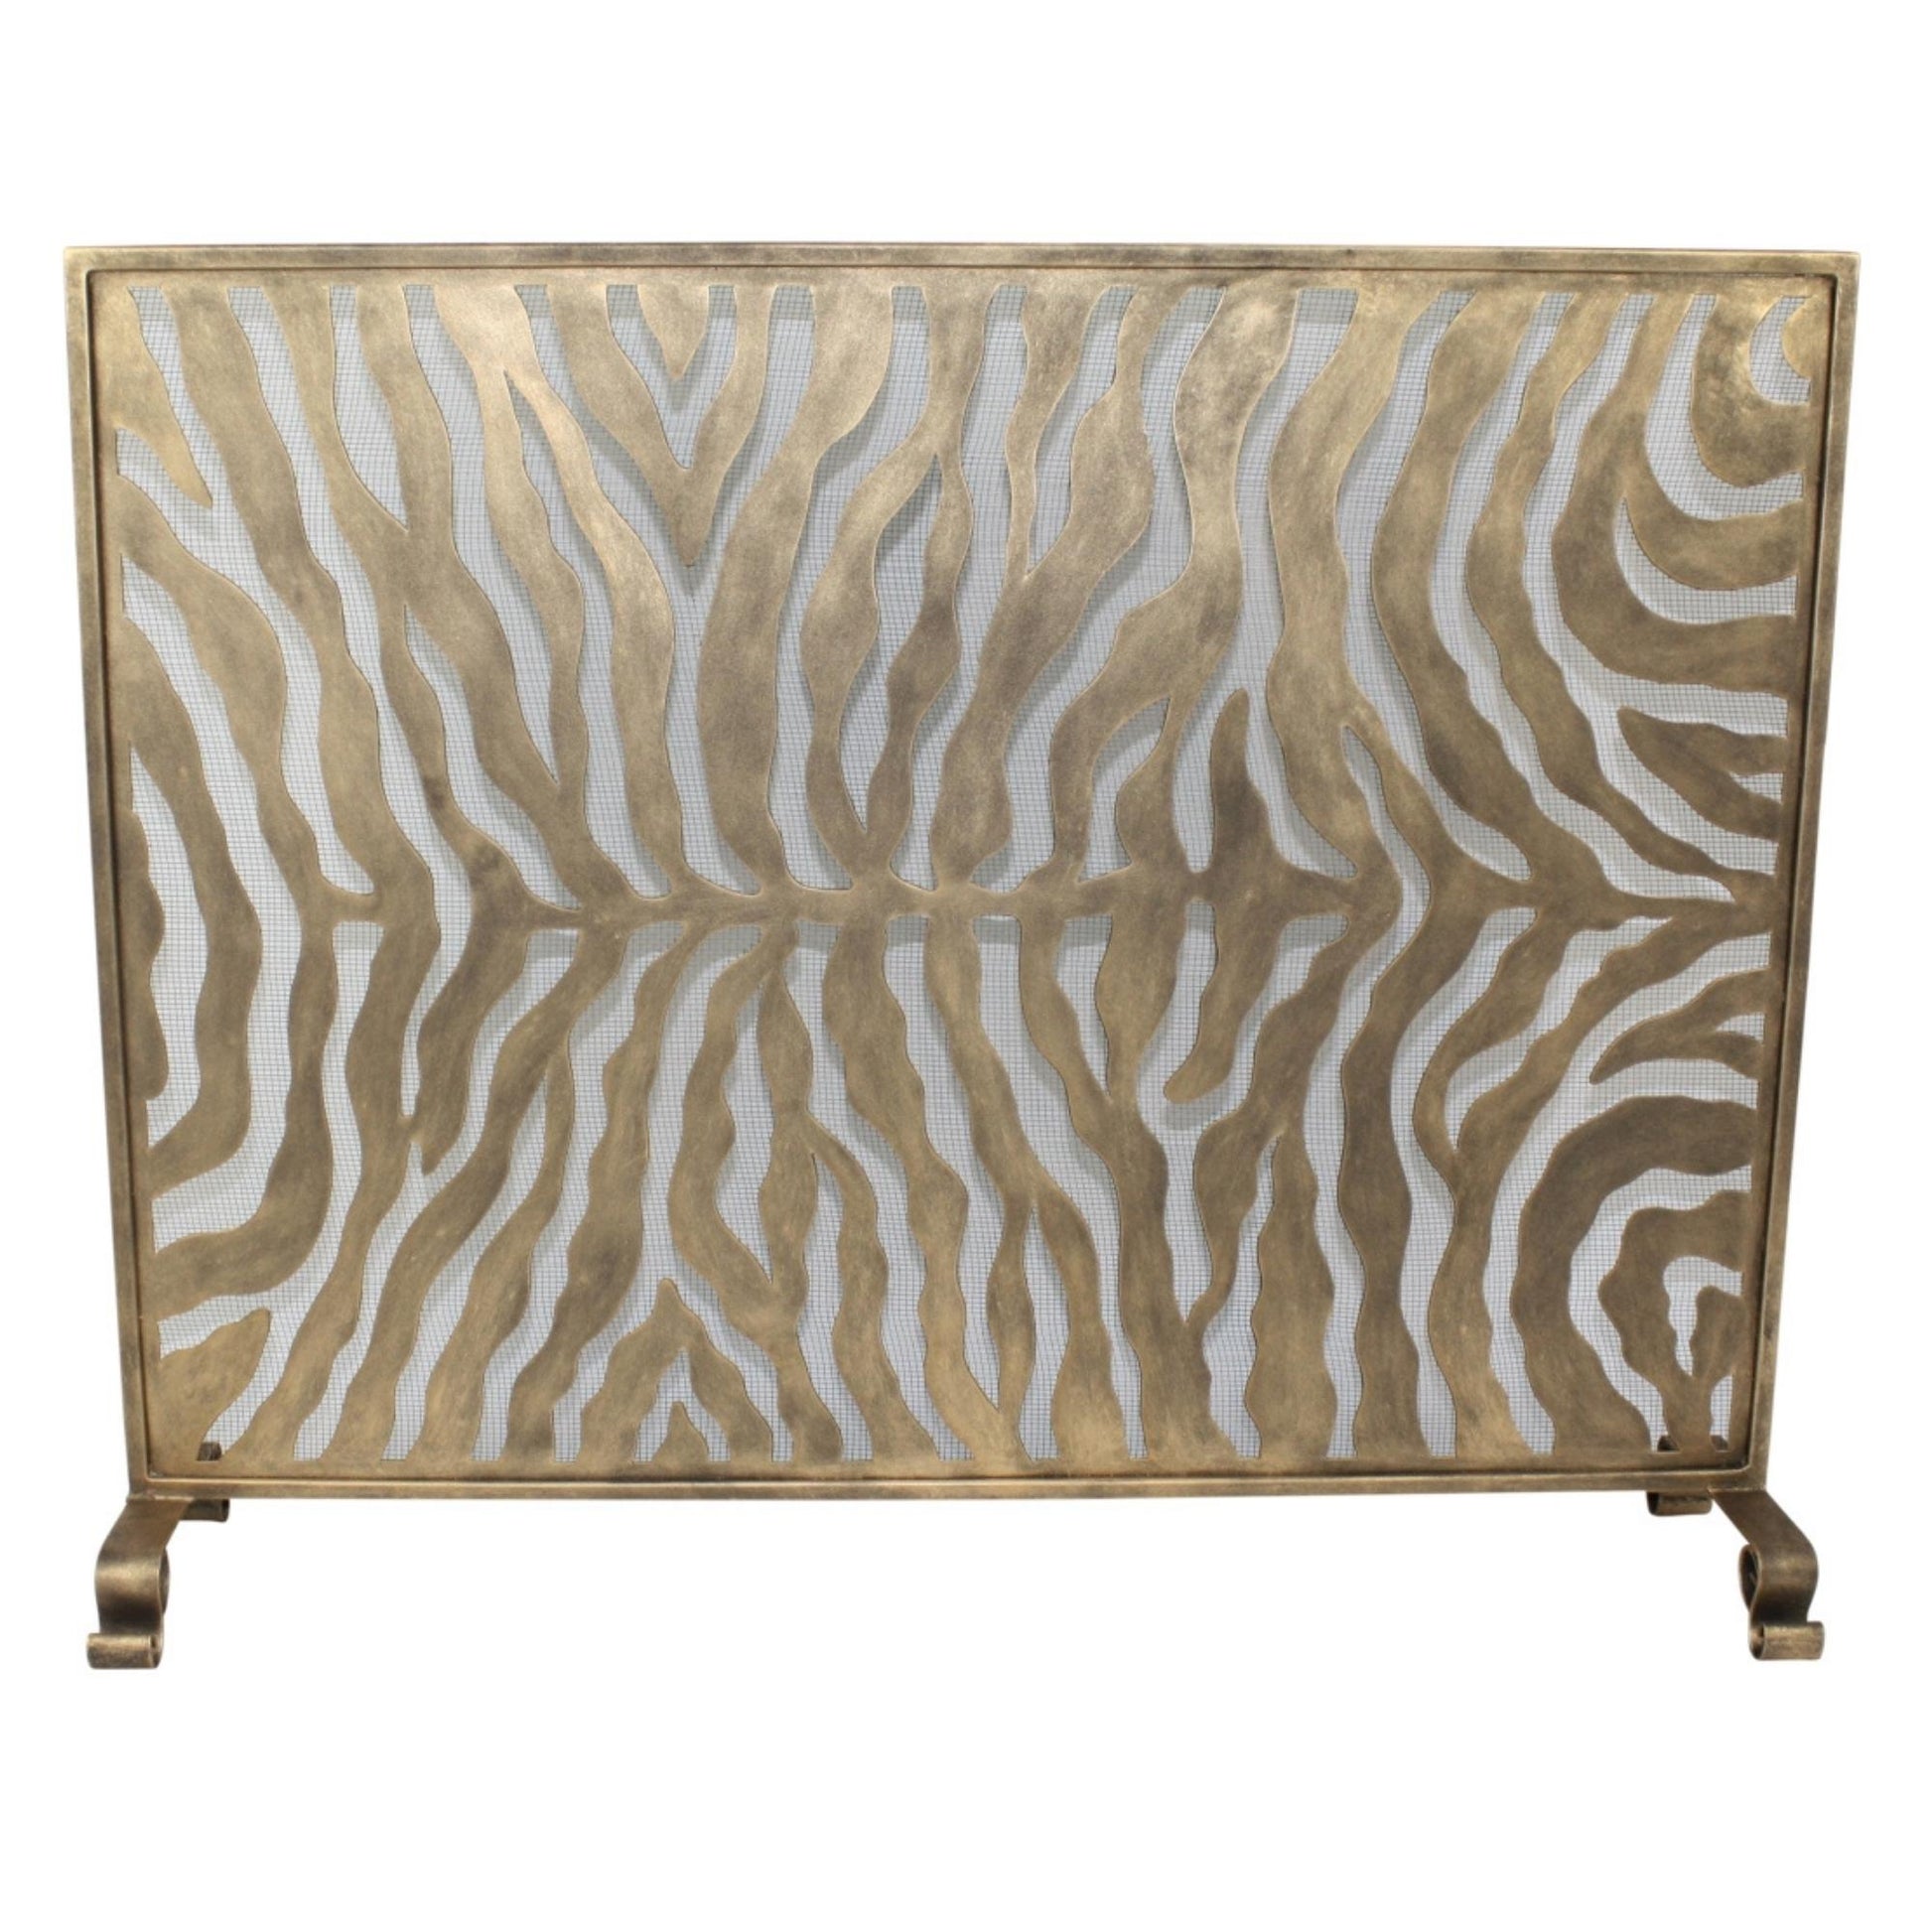 Zebra Design Iron Fire Screen in Burnished Gold - Animal Print Home Decor | InsideOutCatalog.com